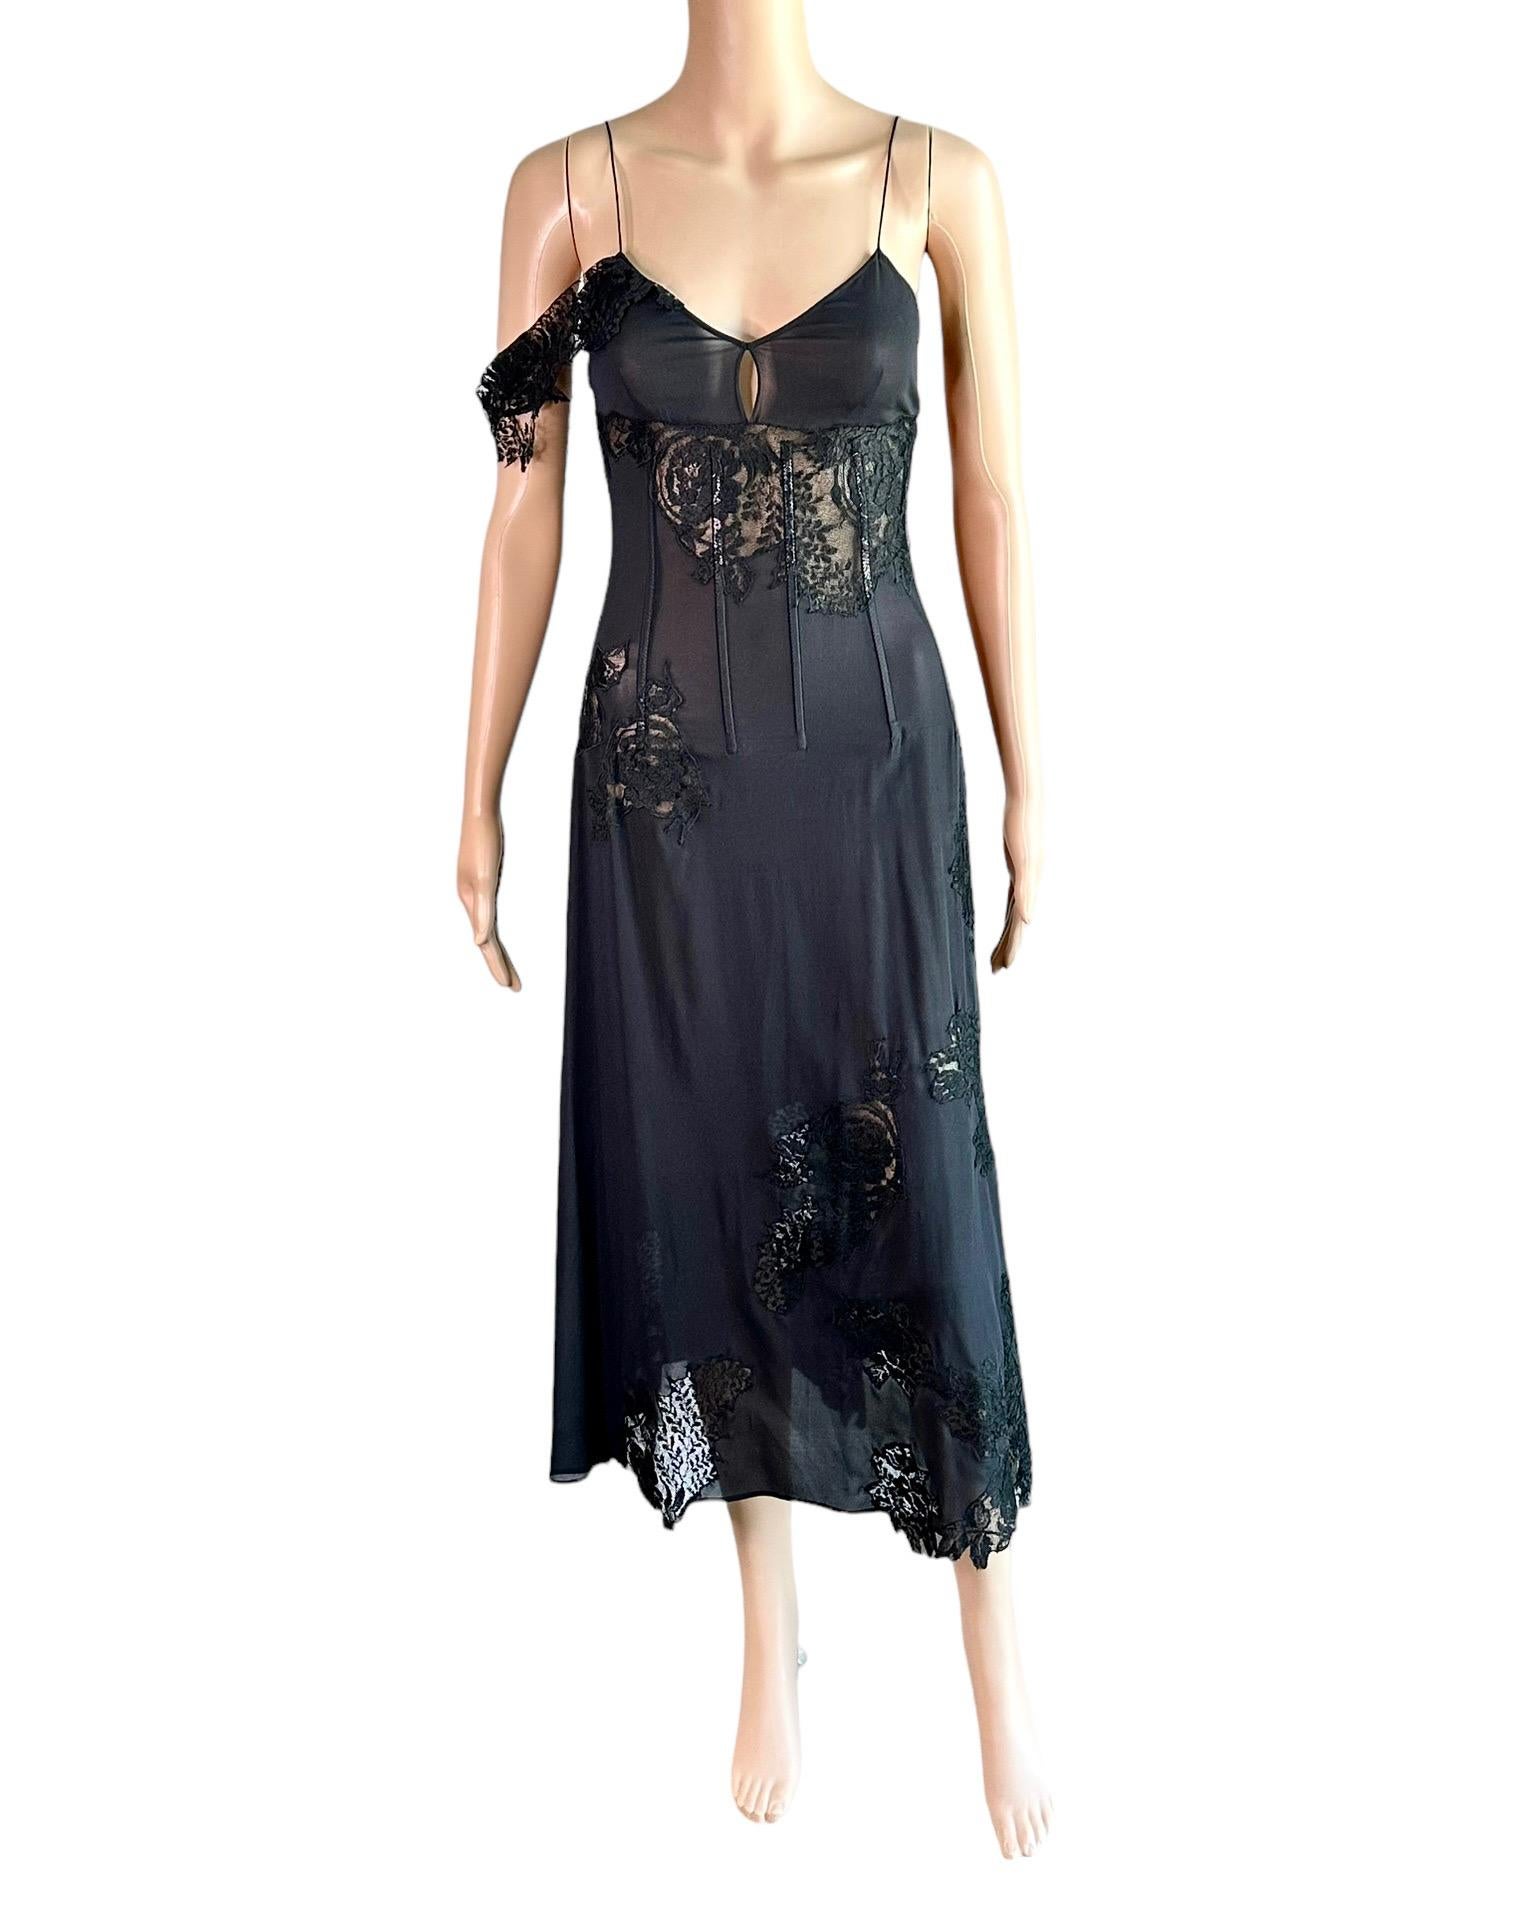 Dolce & Gabbana S/S 2002 Runway Unworn Sheer Lace Corset Black Midi Dress For Sale 5